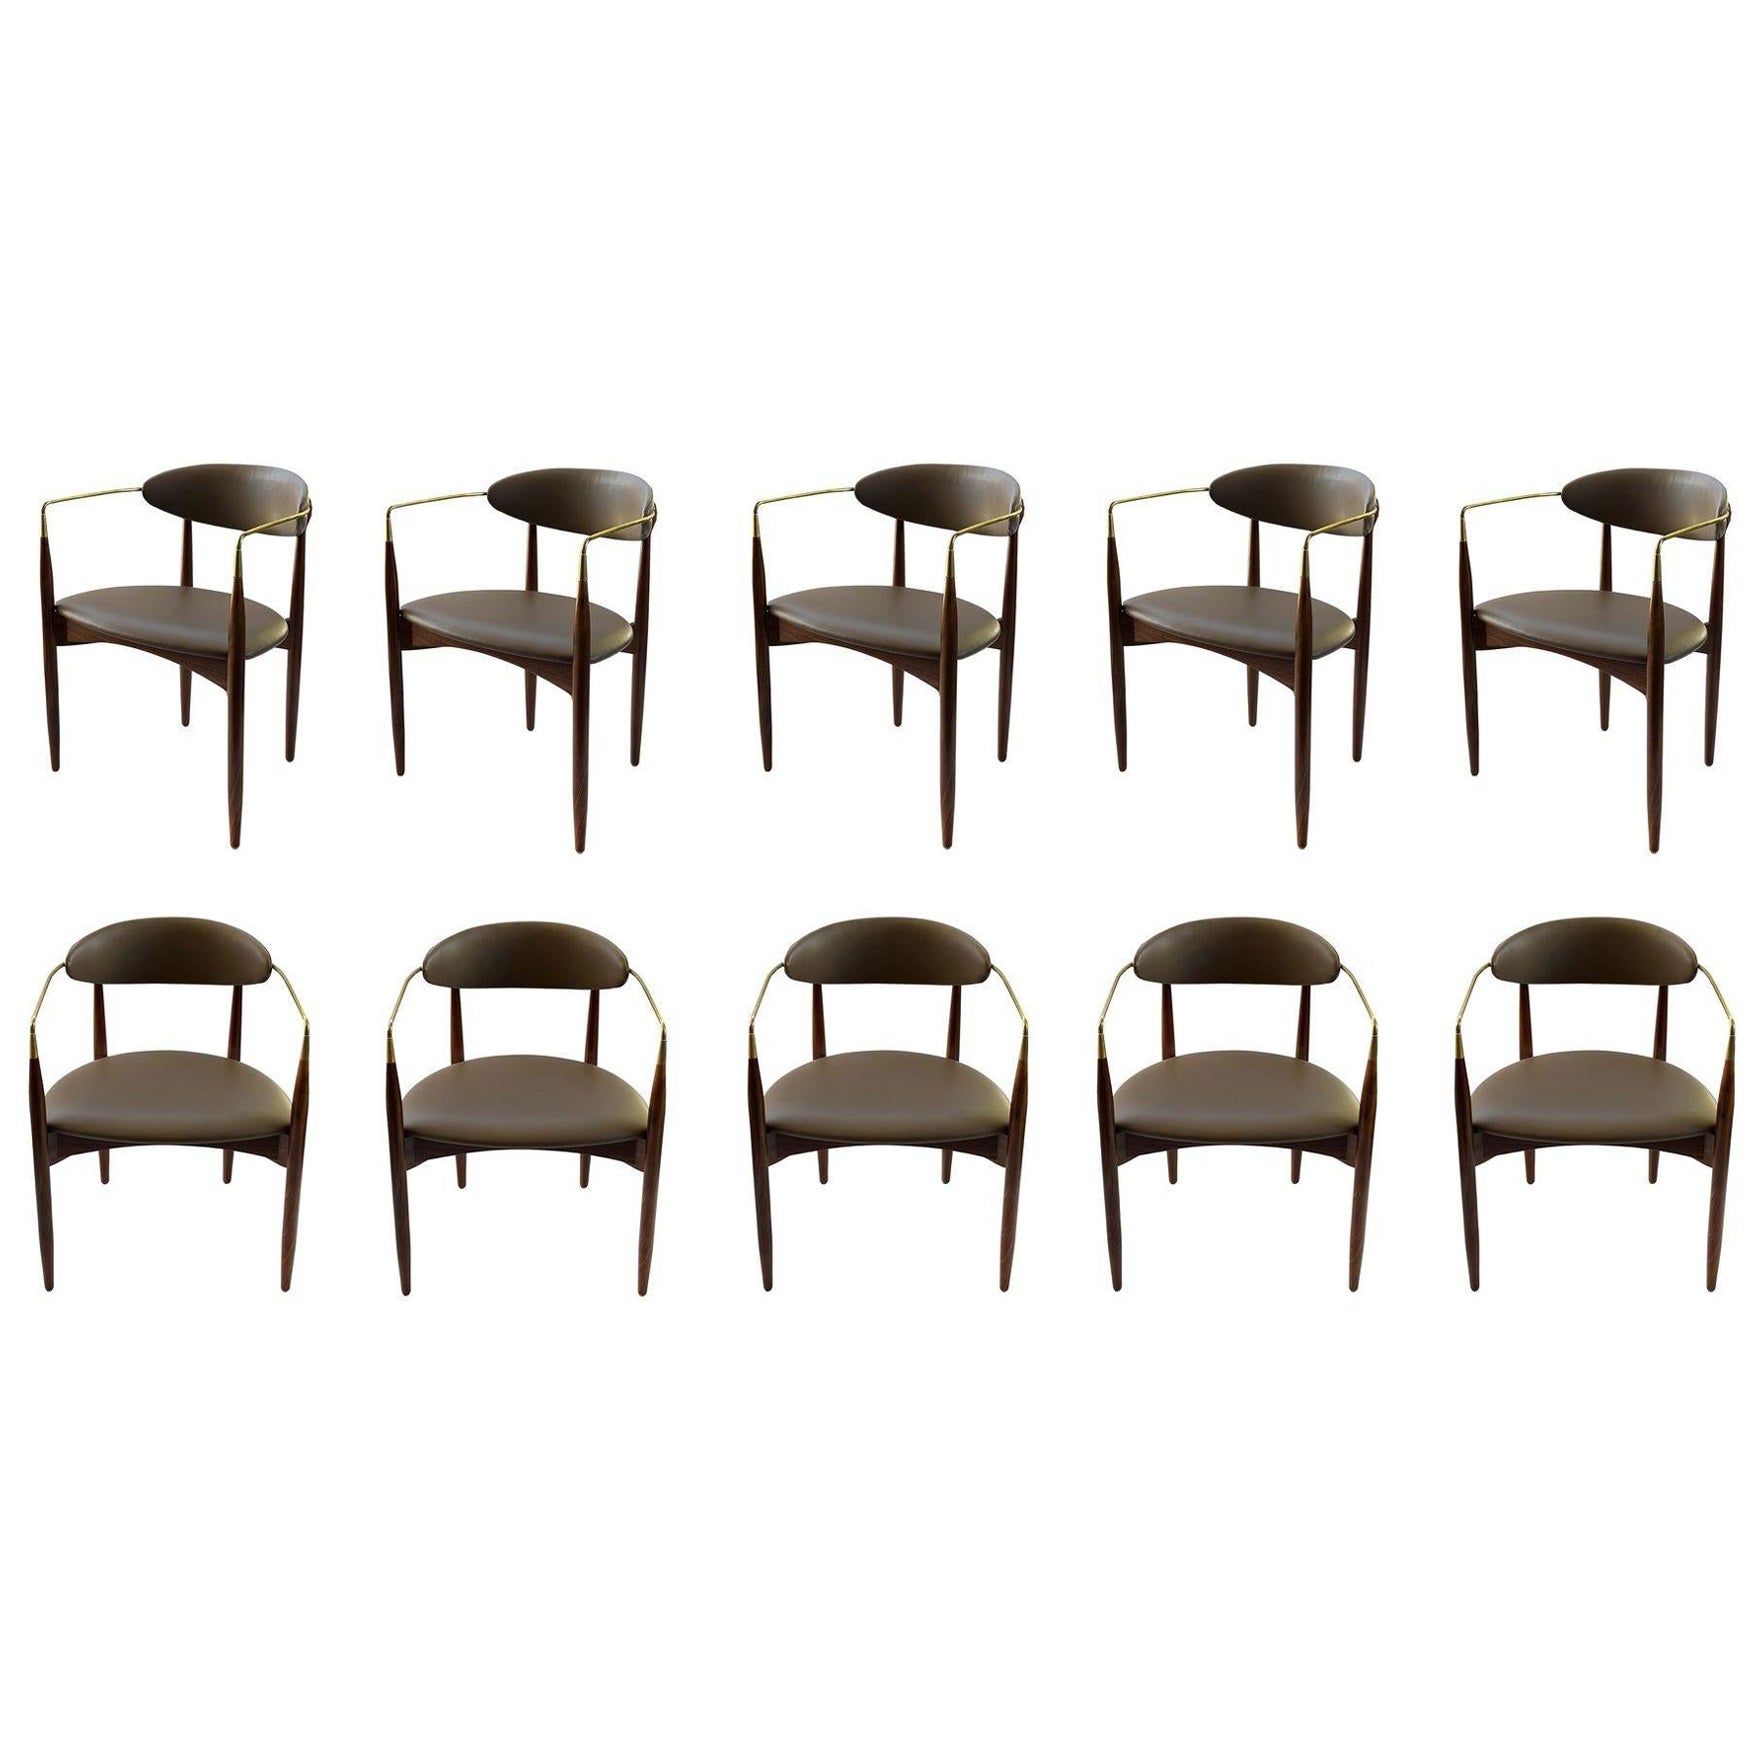 Set of Ten Mid-Century Viscount Chairs by Dan Johnson, c. 1950's